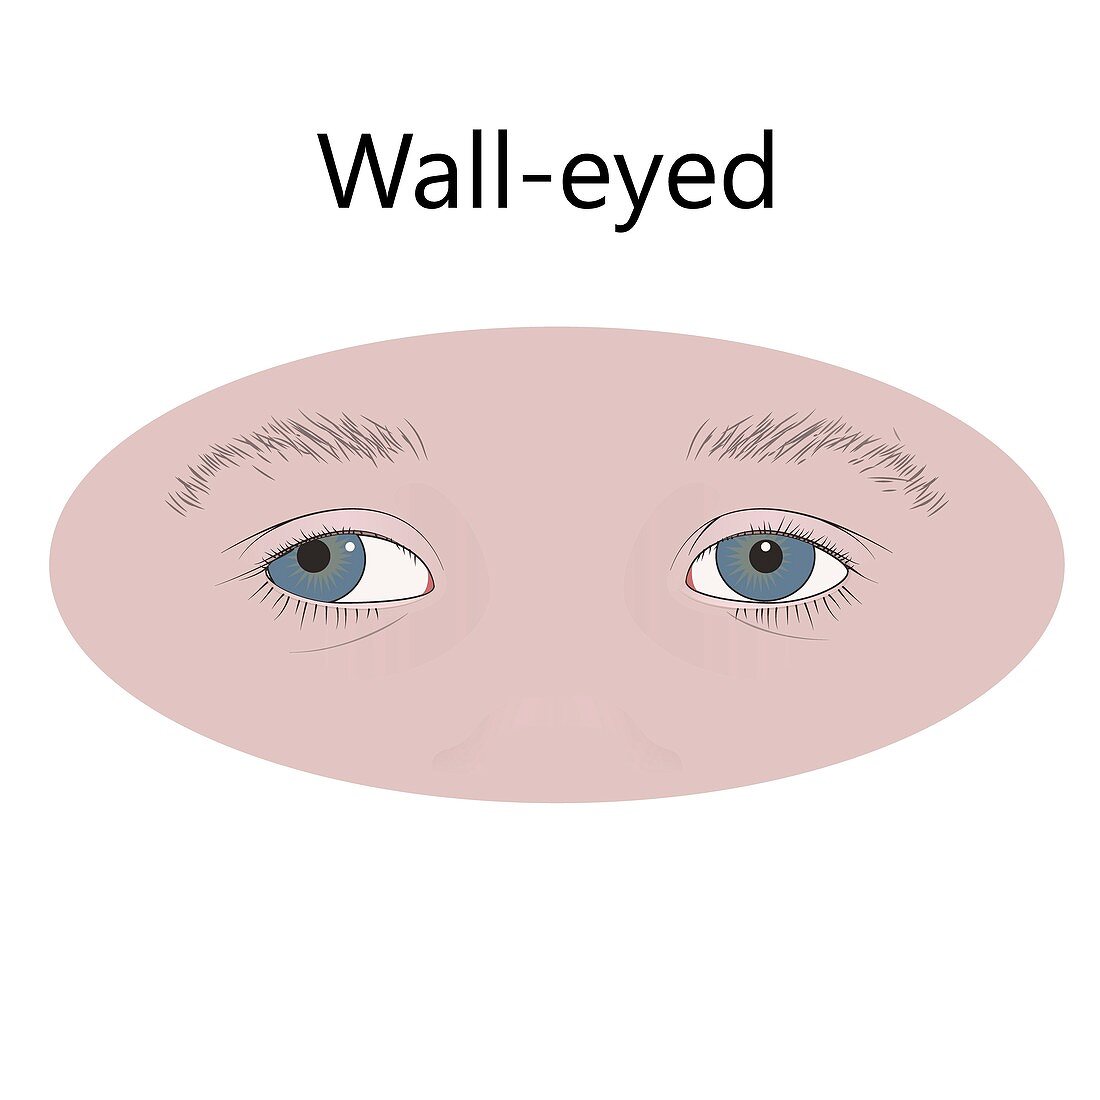 Wall-eyed child, illustration